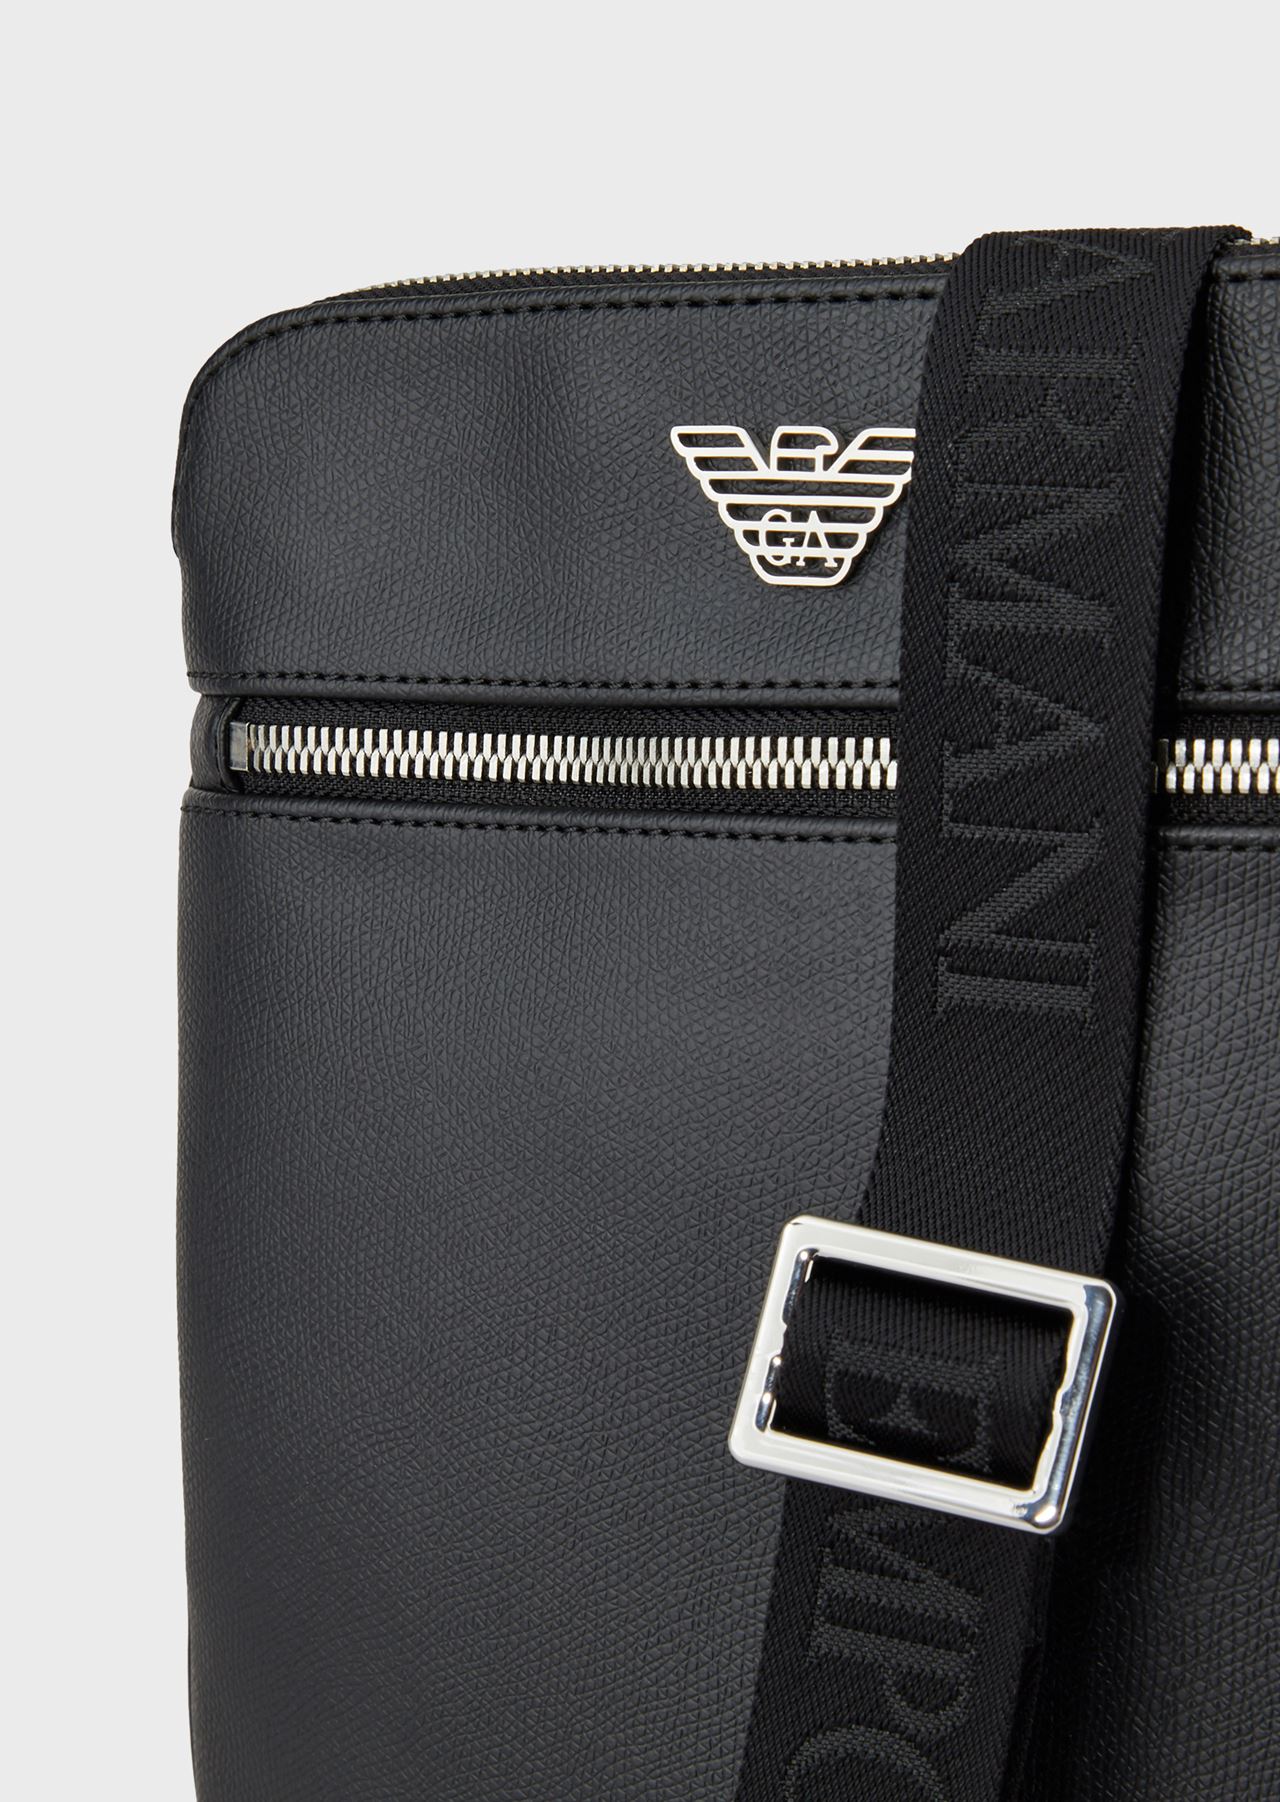 Small, flat shoulder bag with logo plate | Man | Emporio Armani